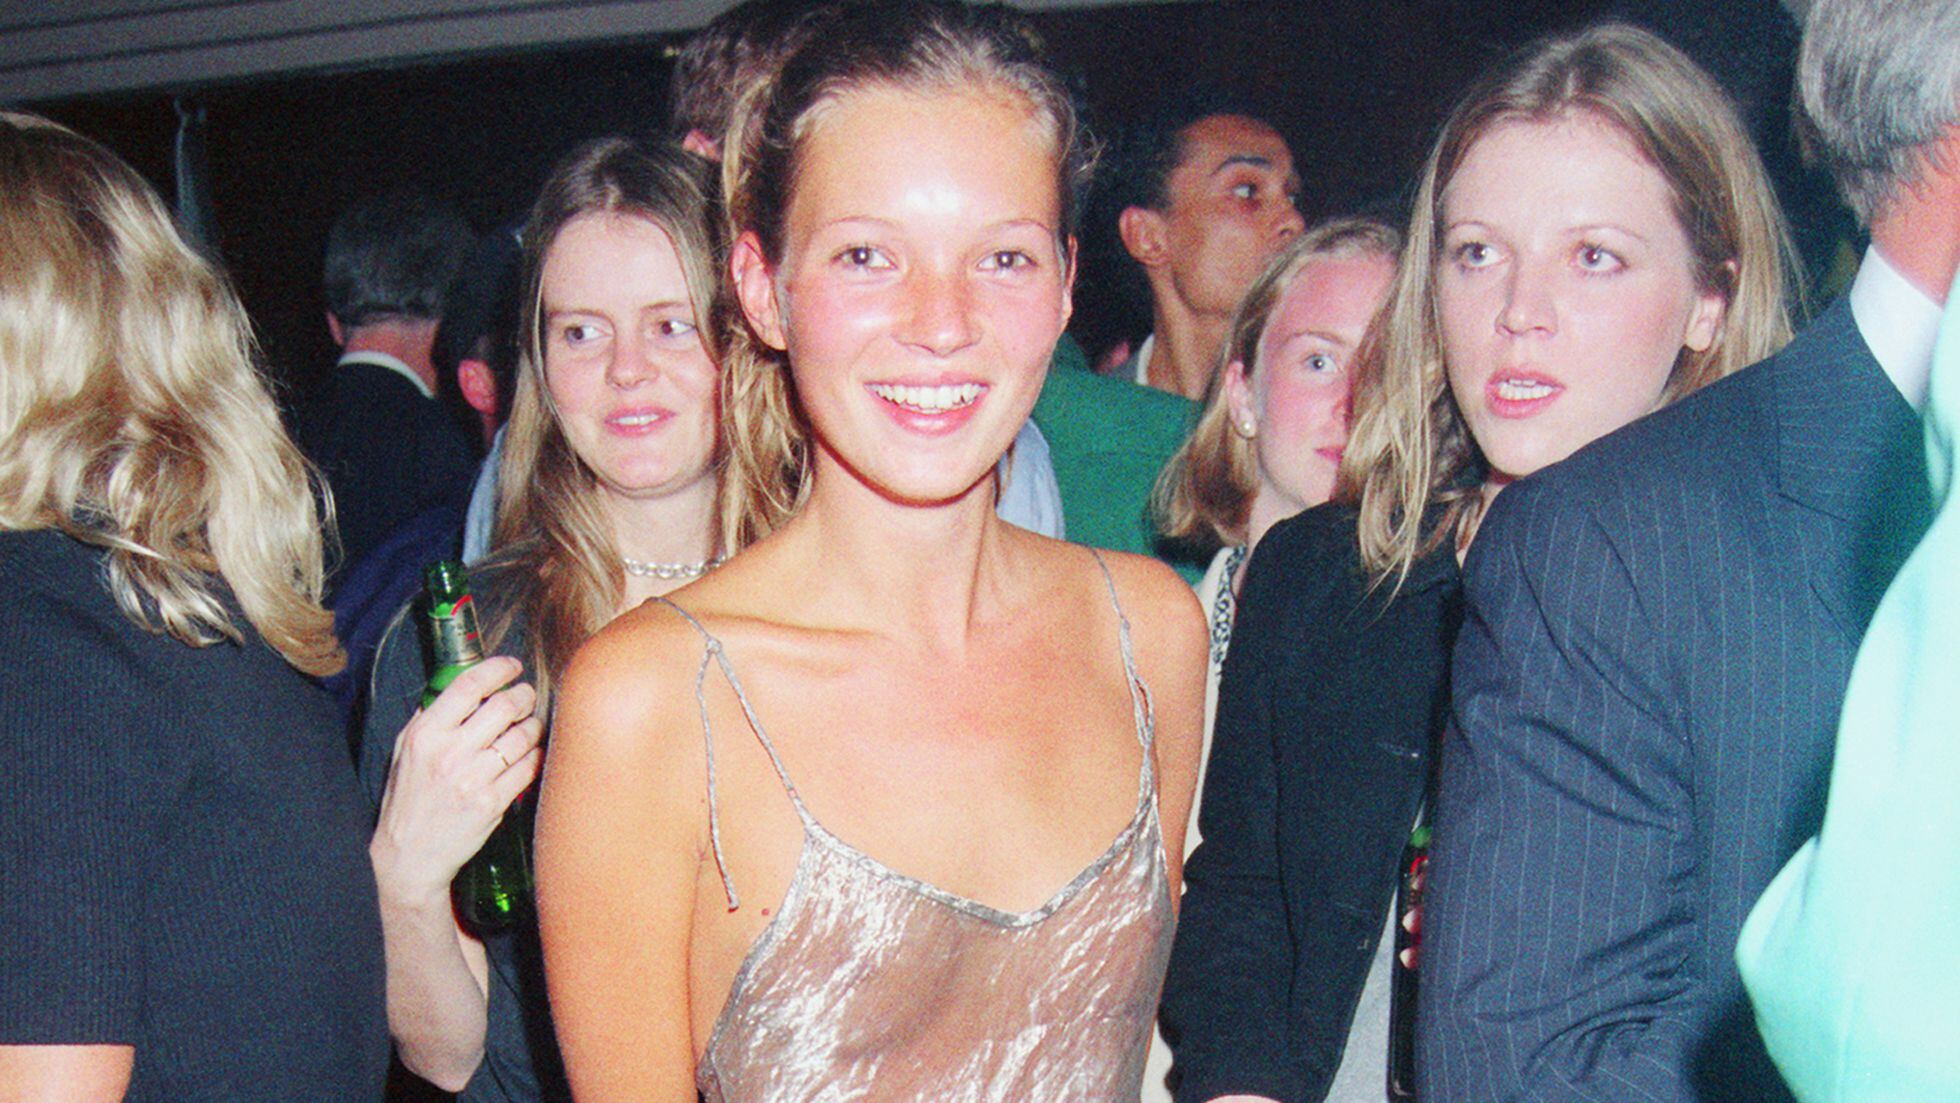 De Chiara Ferragni a Kate Moss, el regreso del vestido transparente - Foto 1